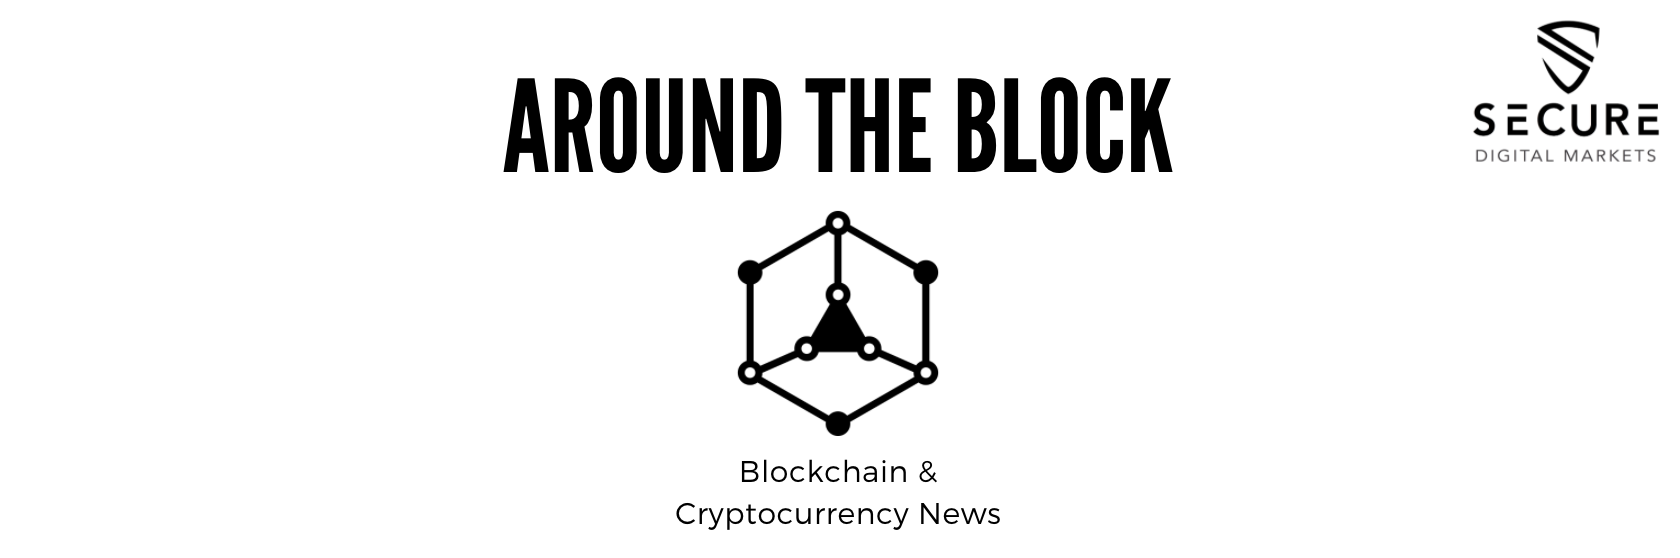 blockchain news